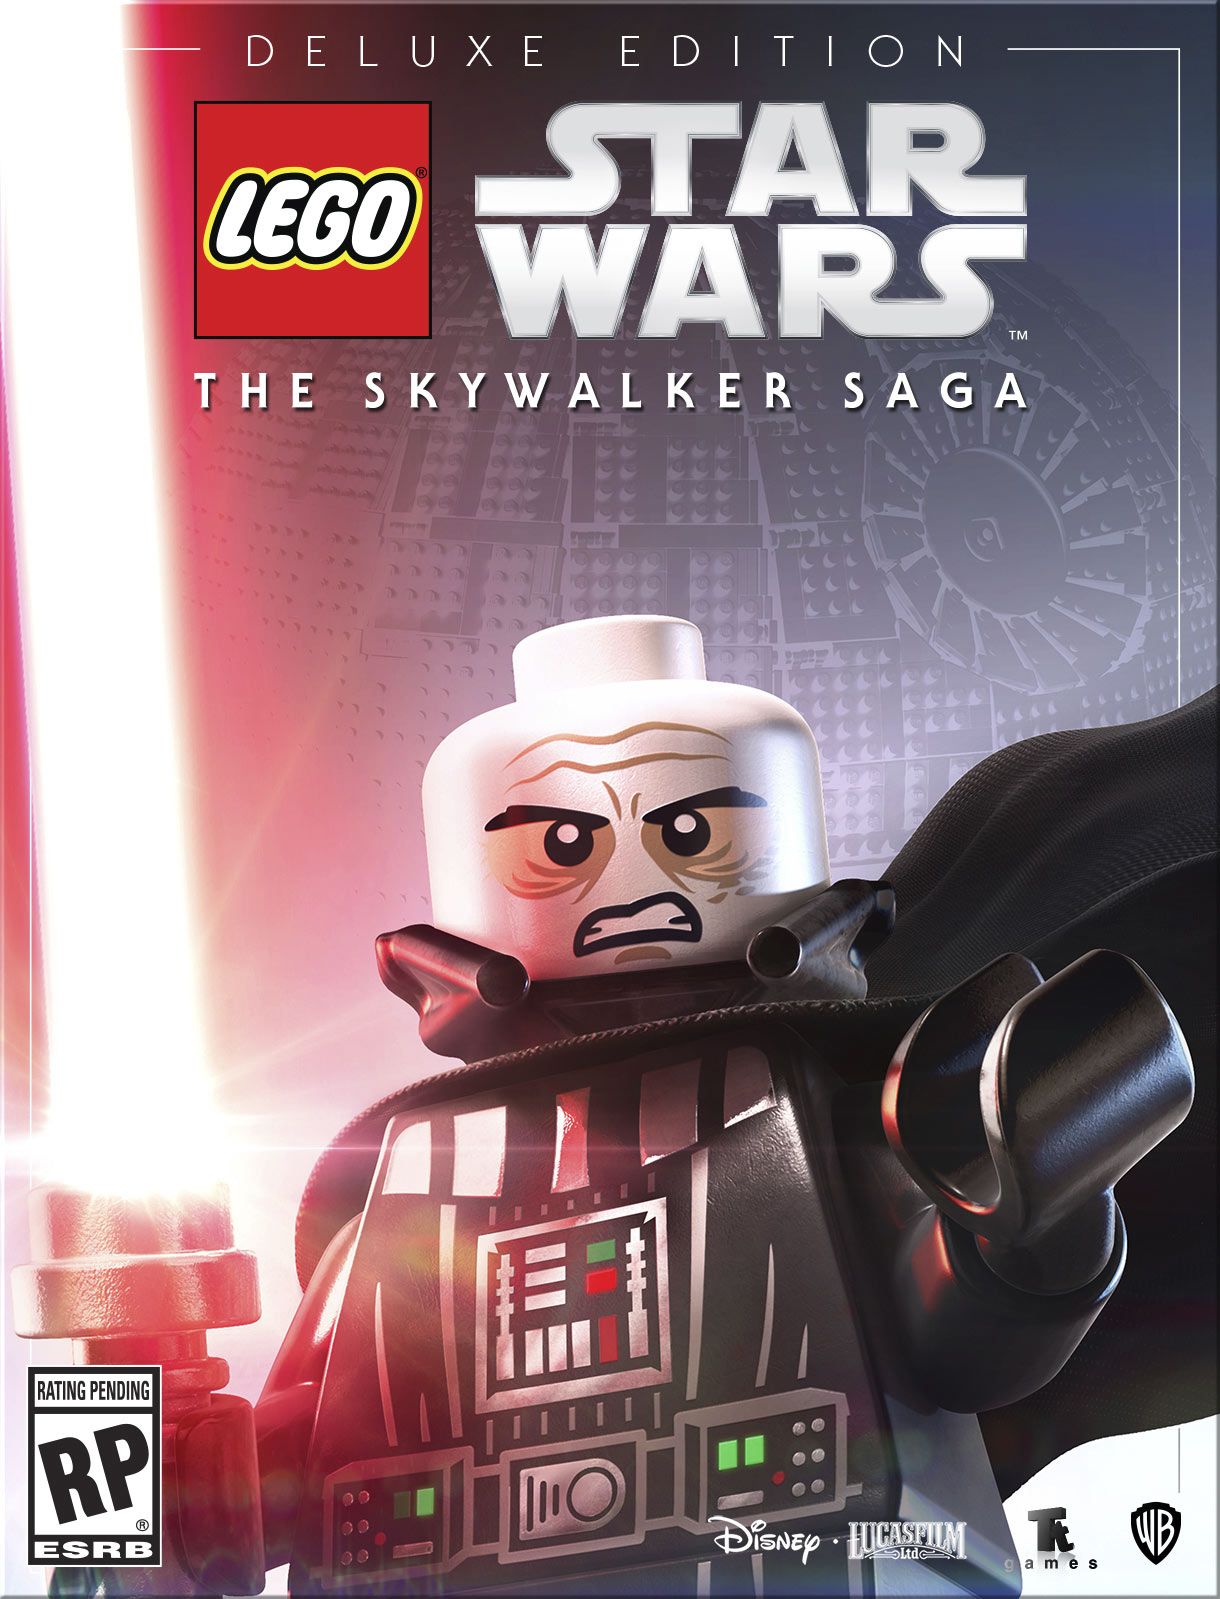 The LEGO Star Wars: The Skywalker Saga Deluxe EditionUnmasked. StarWars .com